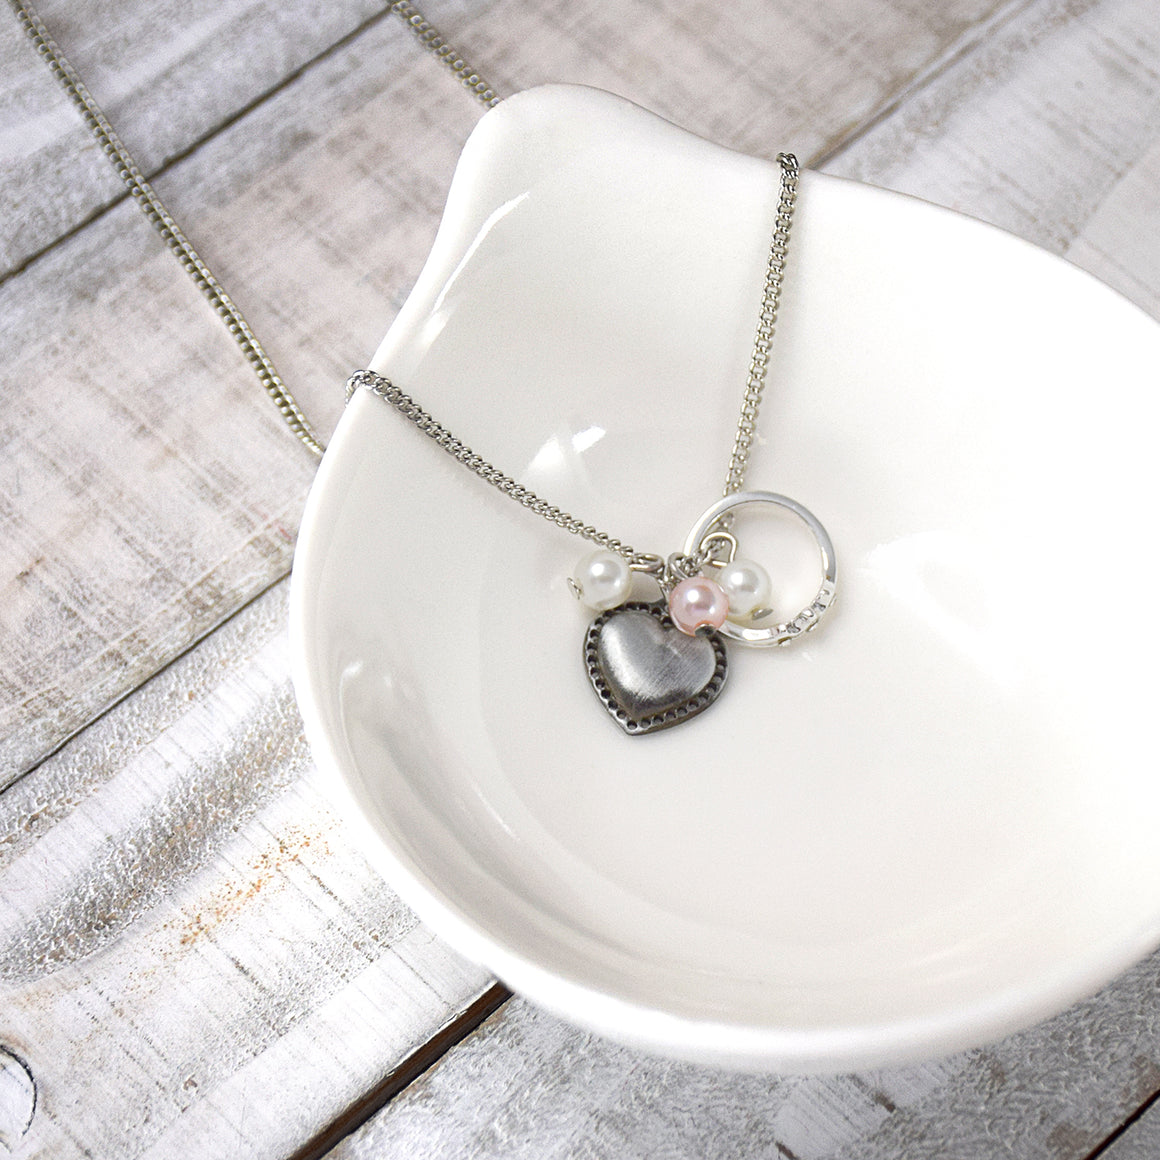 Glitter Sparkle Shine Necklace - Silver finish charm necklace